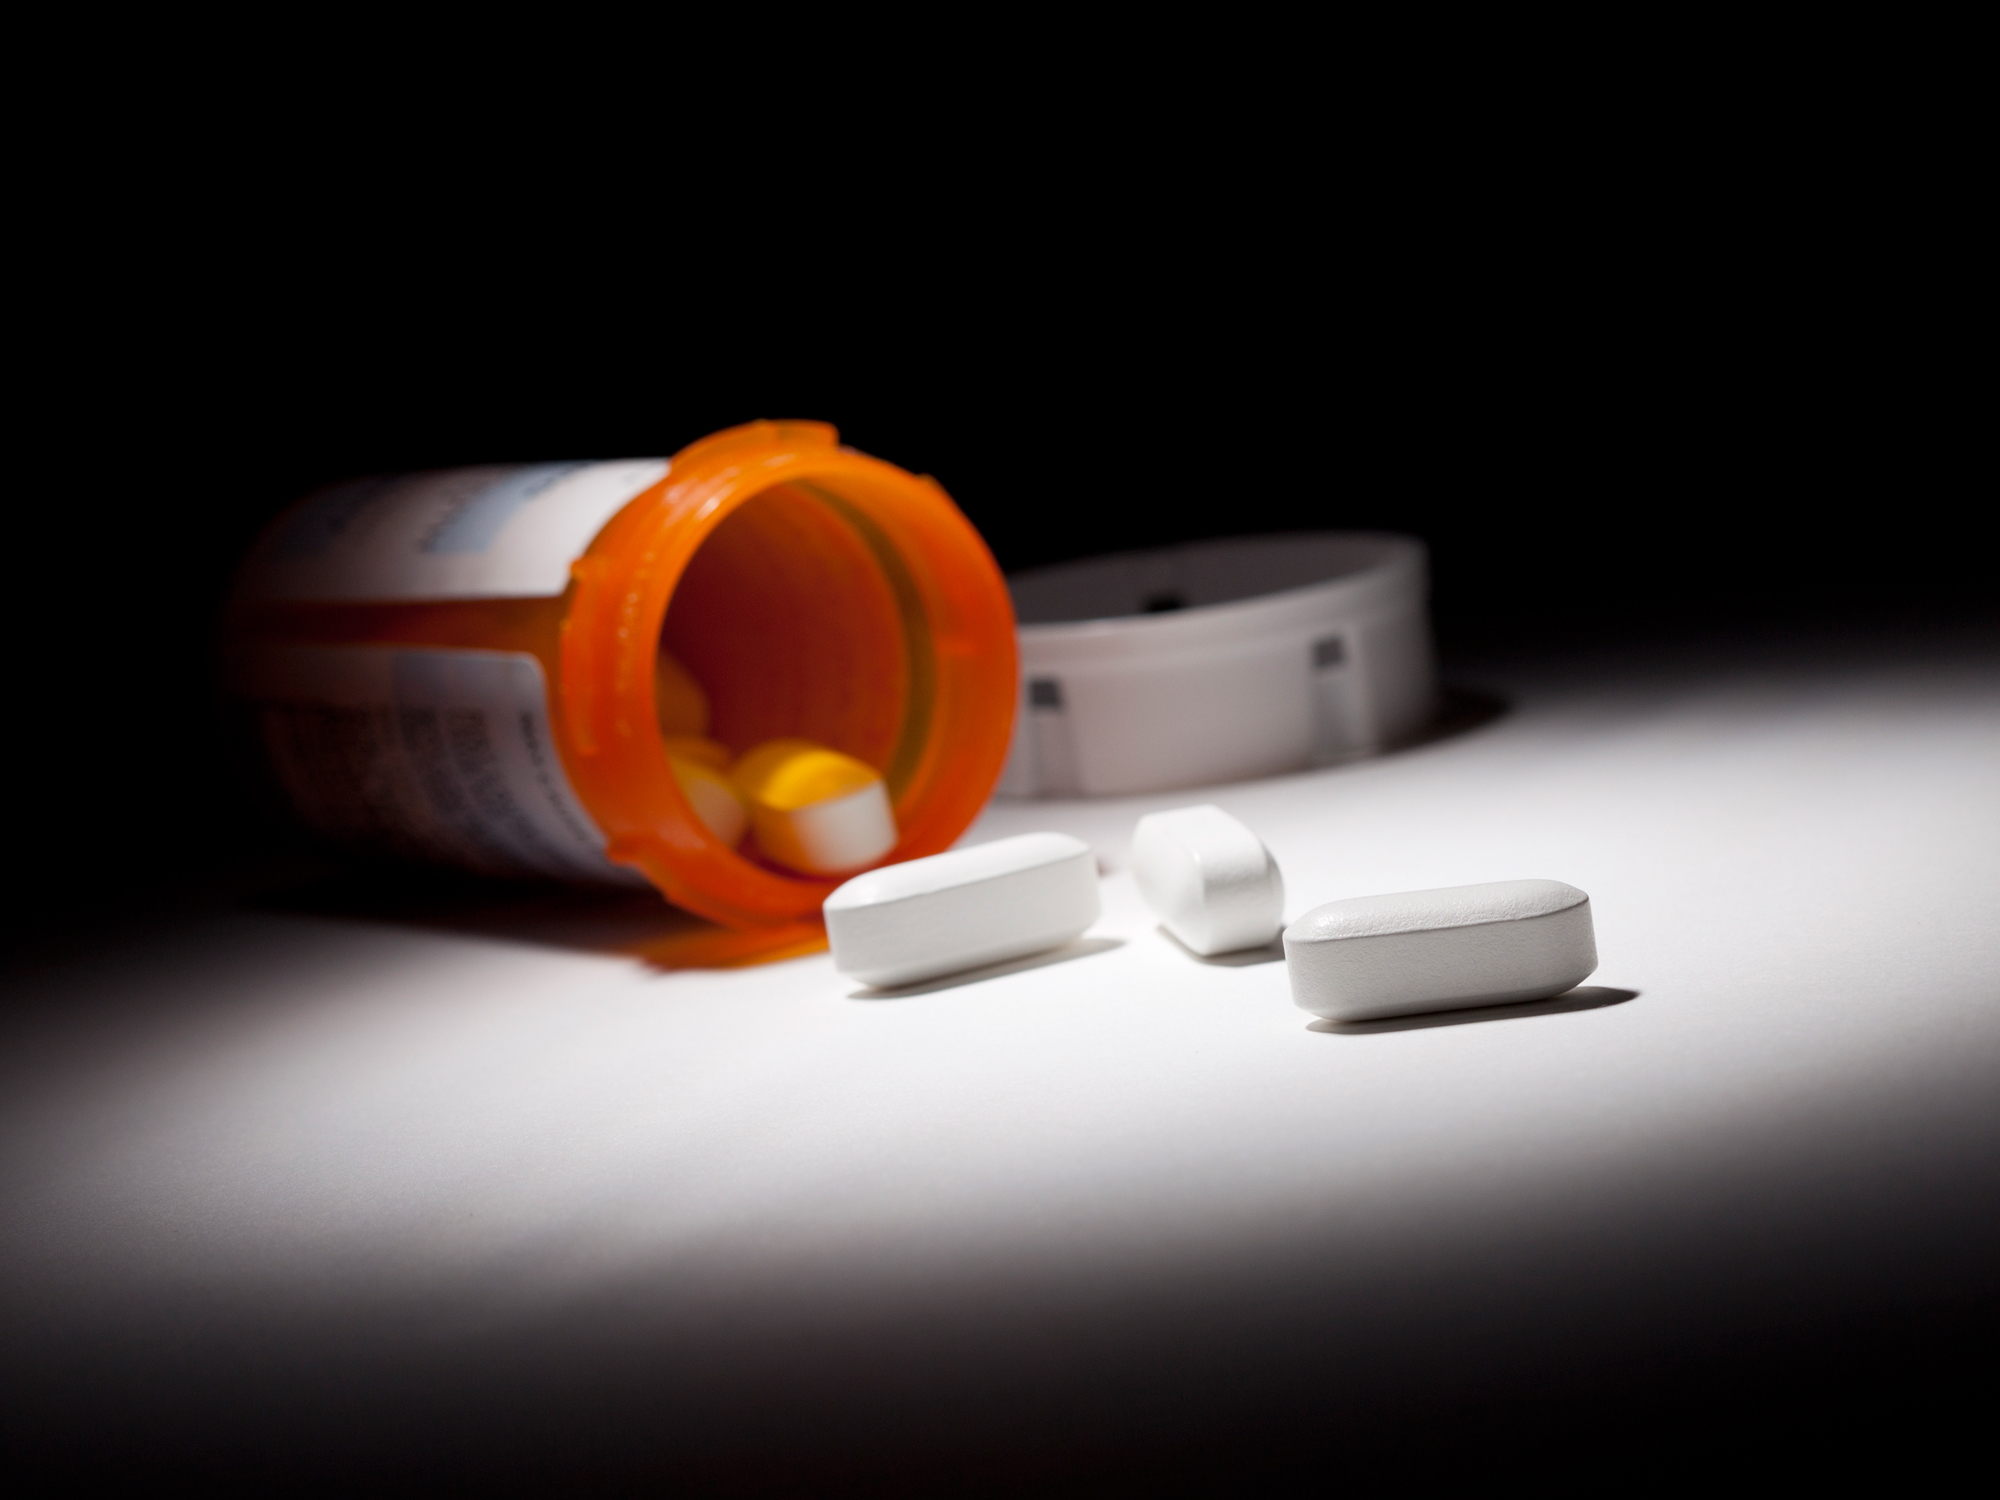 Prescription pain pills perpetuate pain